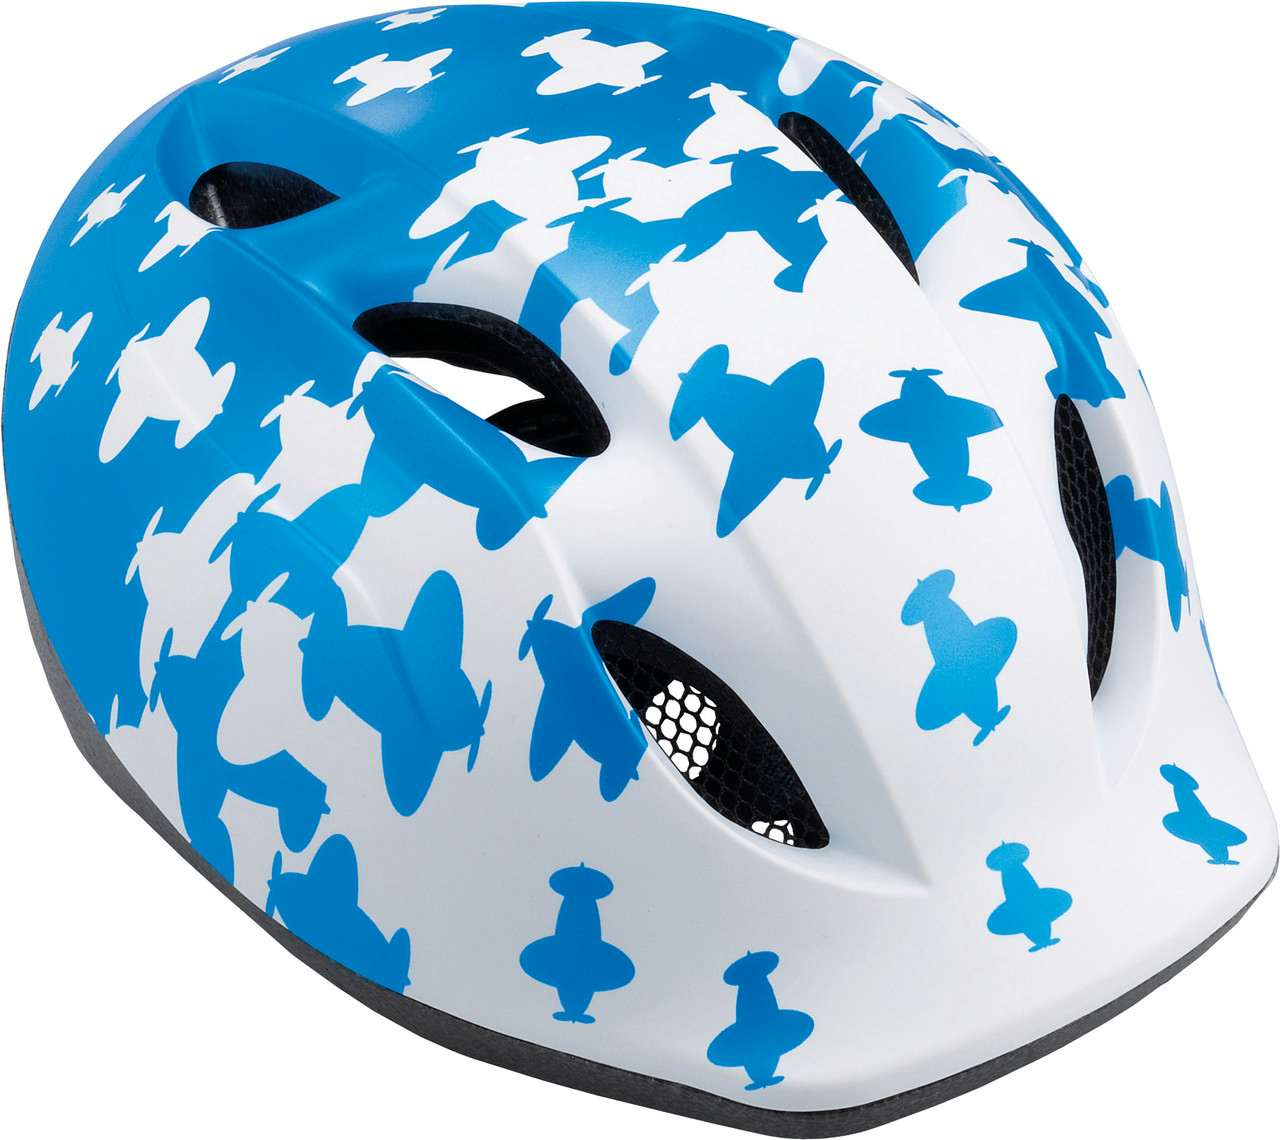 Super Buddy Helmet White/Blue Airplanes